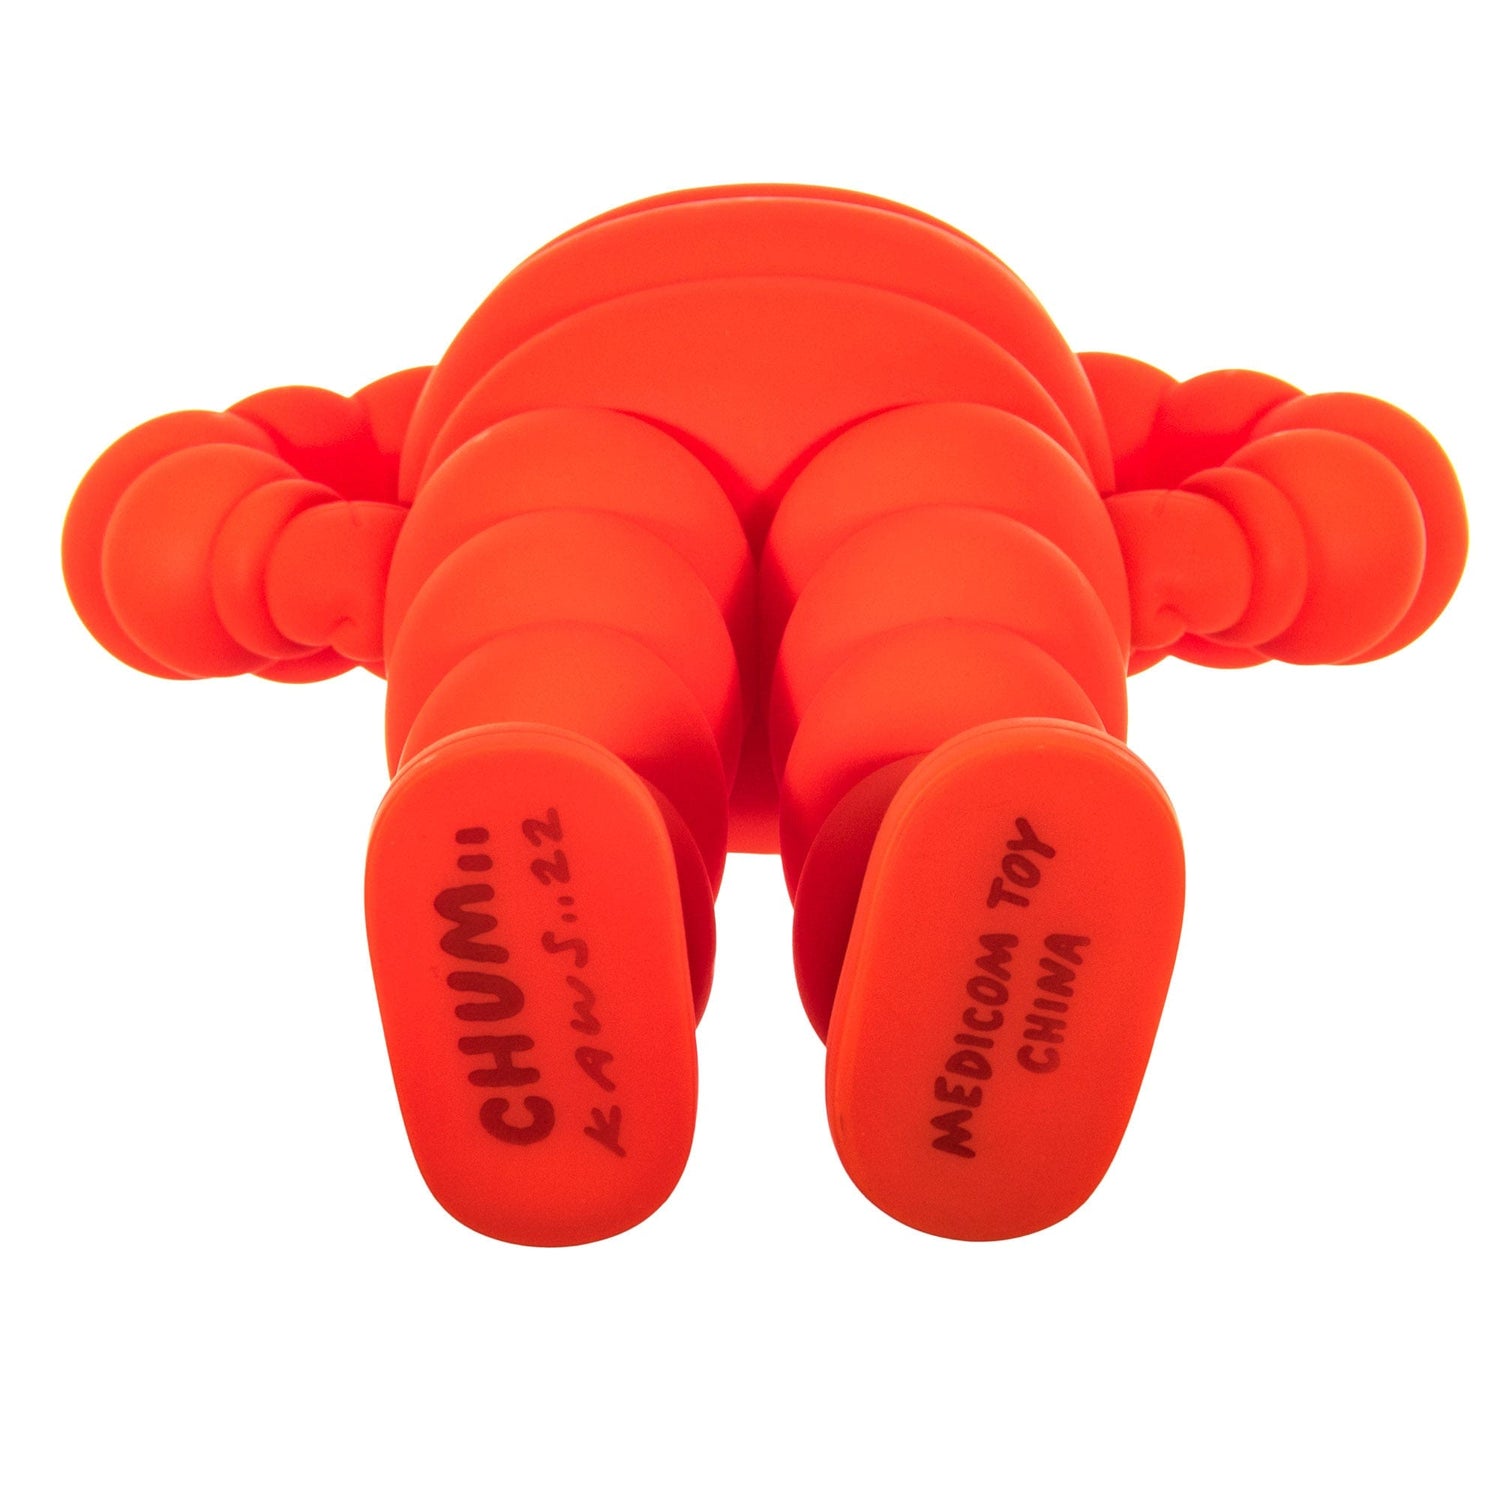 KAWS; Chum Vinyl Figure Orange Bottom